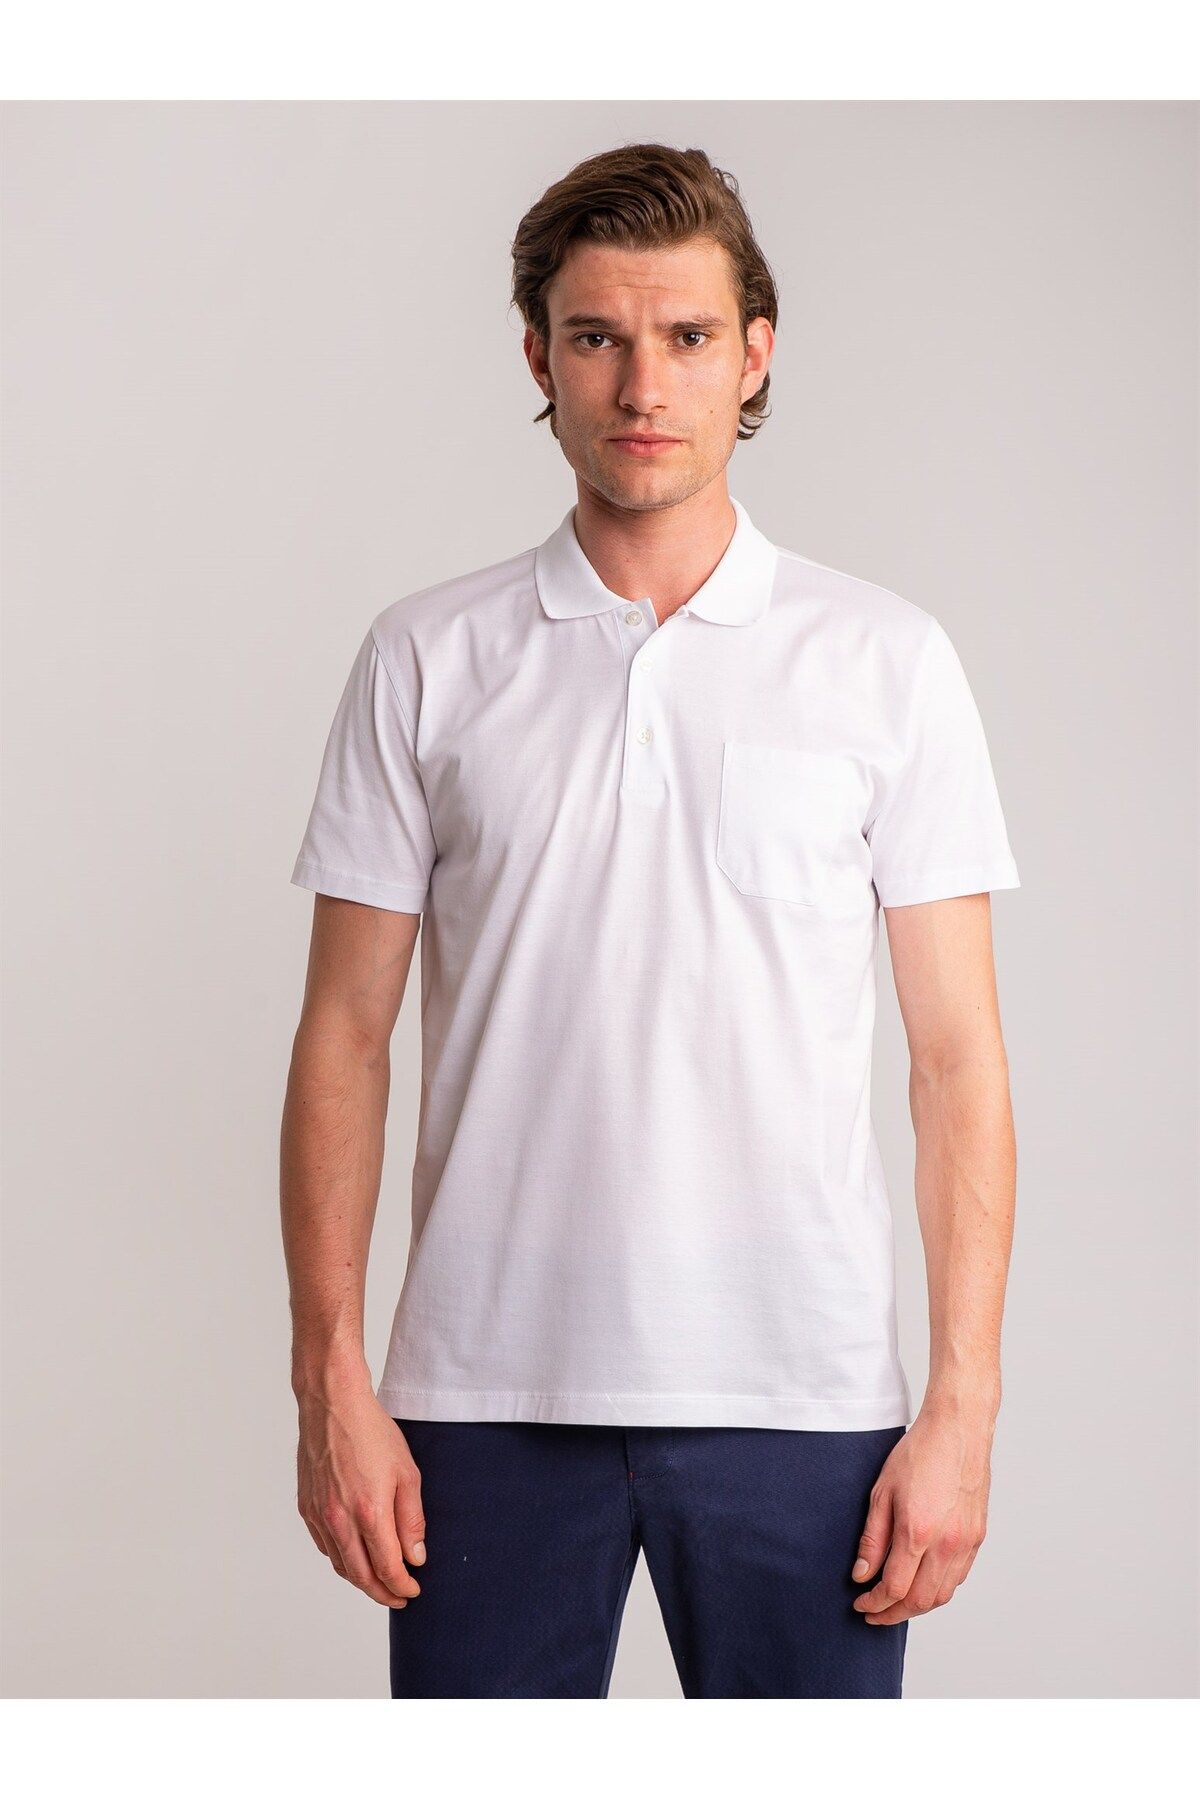 Dufy تی شرت یقه چوگان با تناسب معمولی مردانه سفید